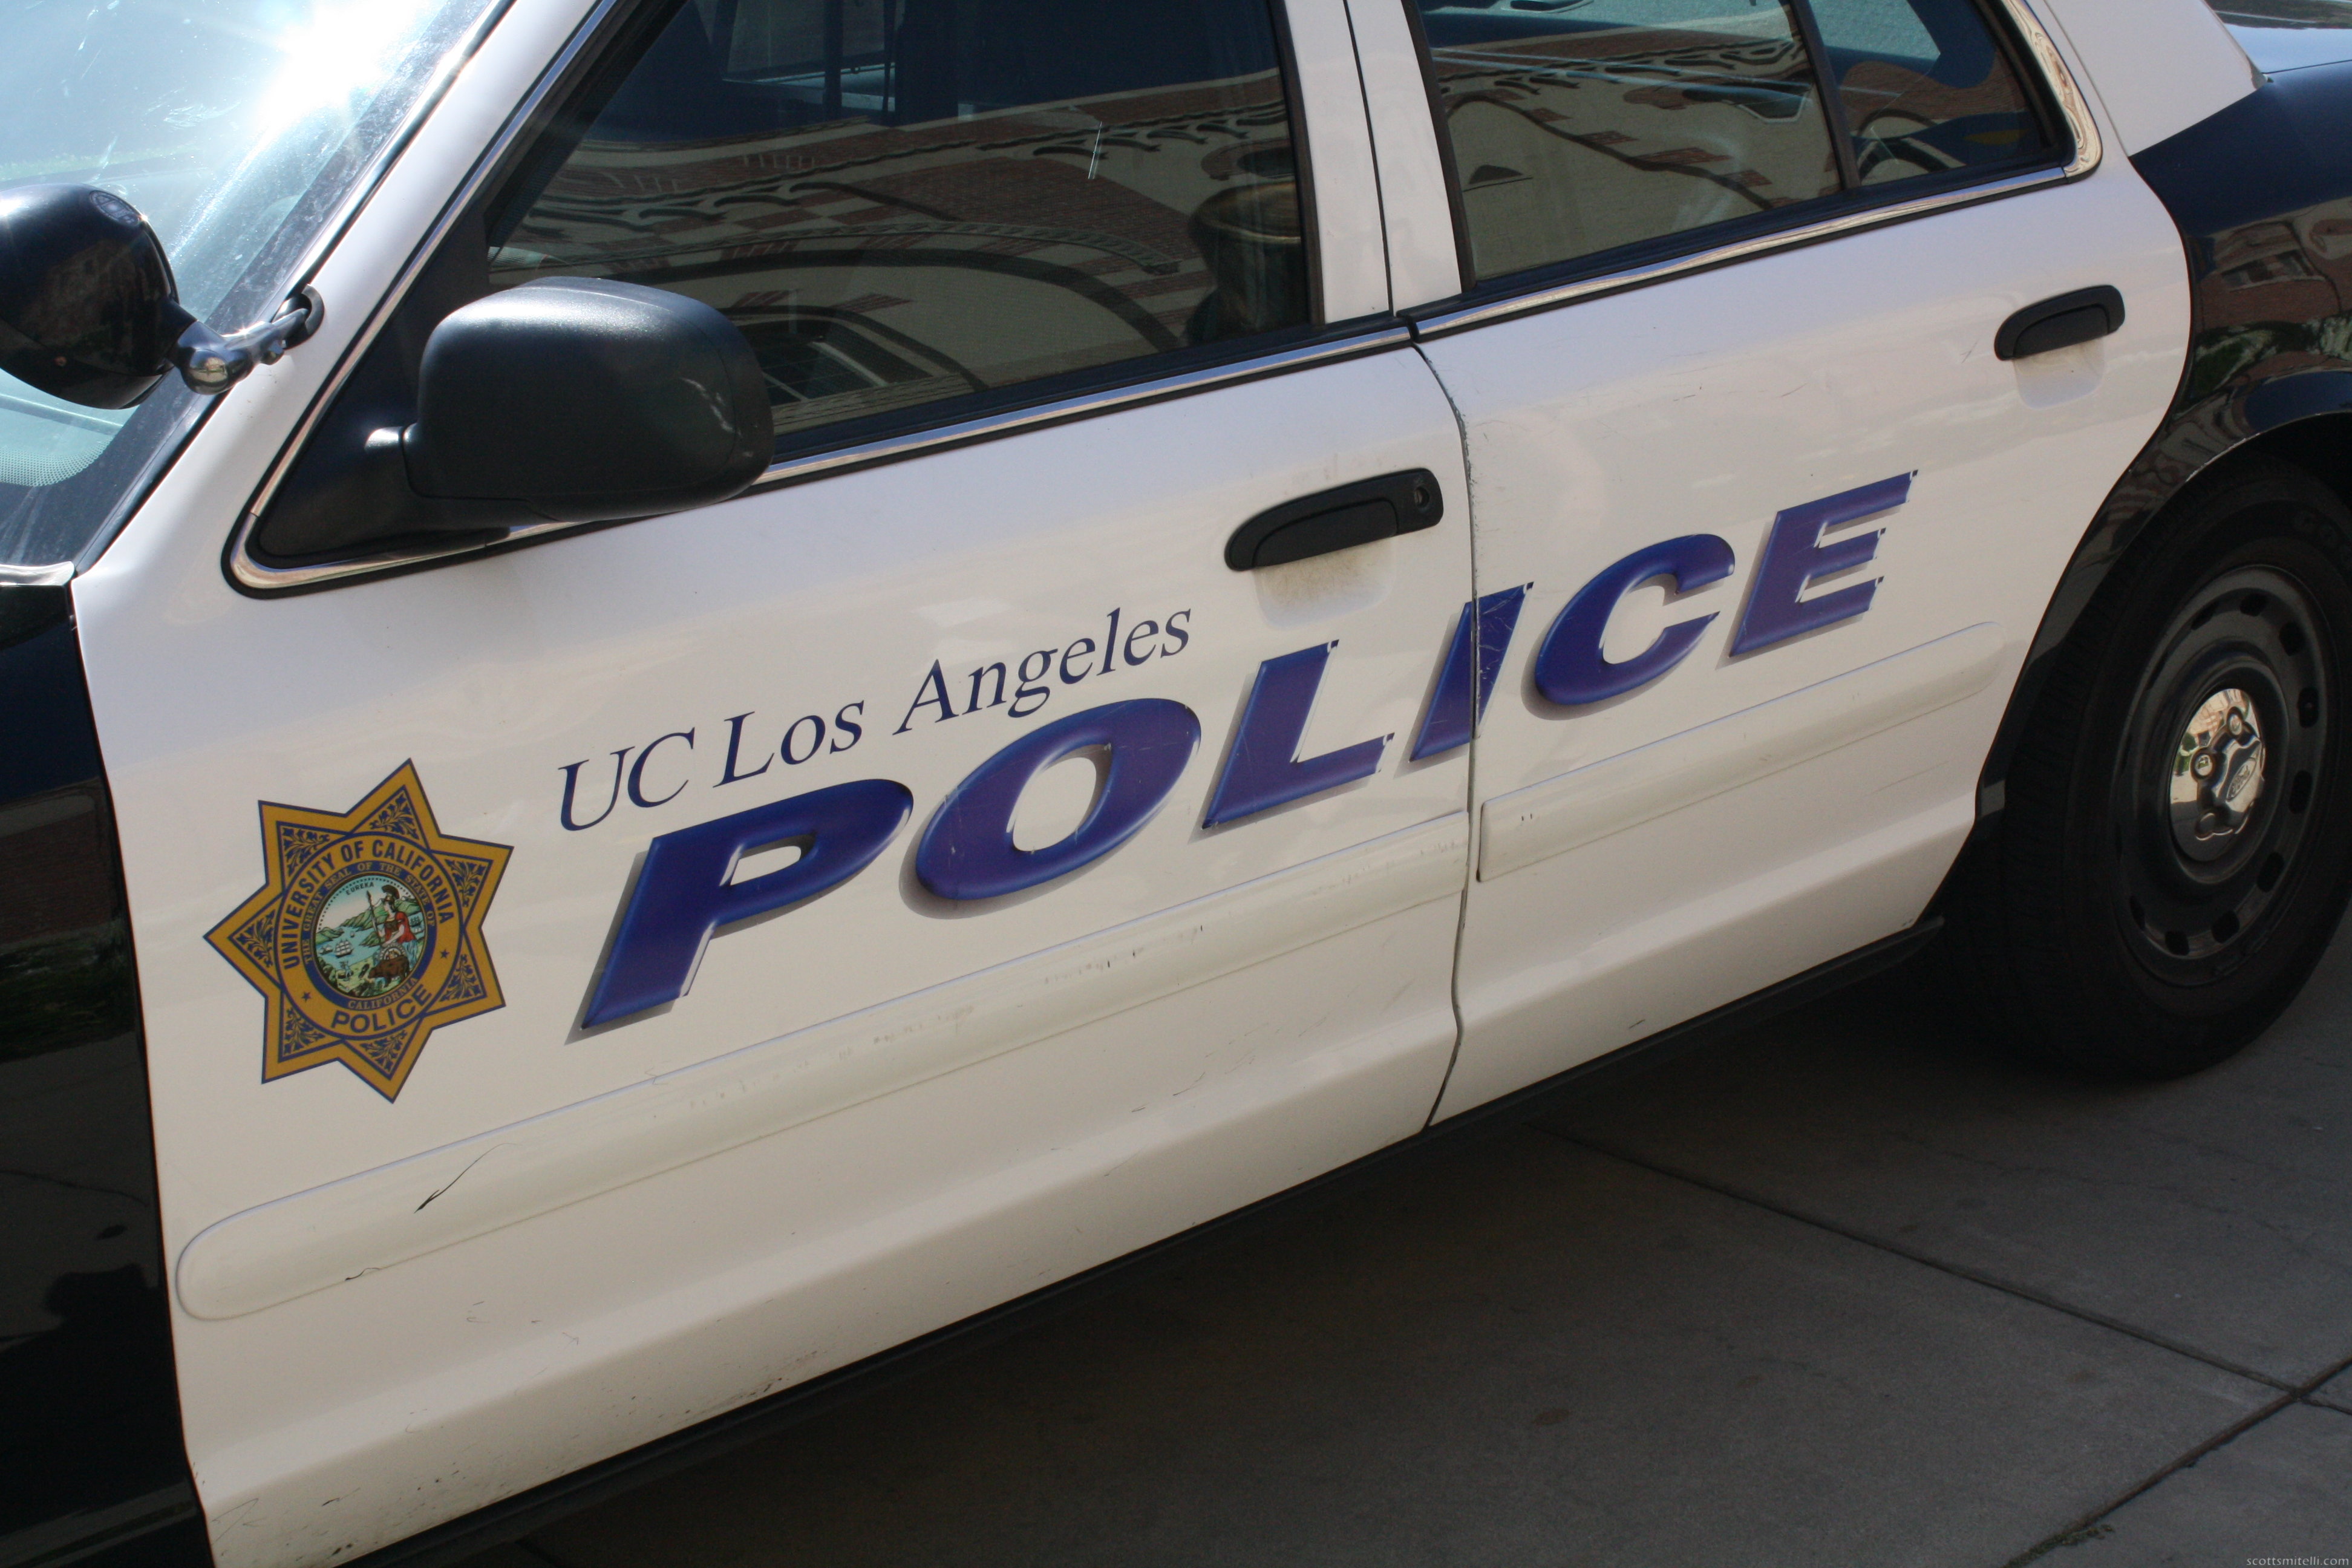 UC Los Angeles Police